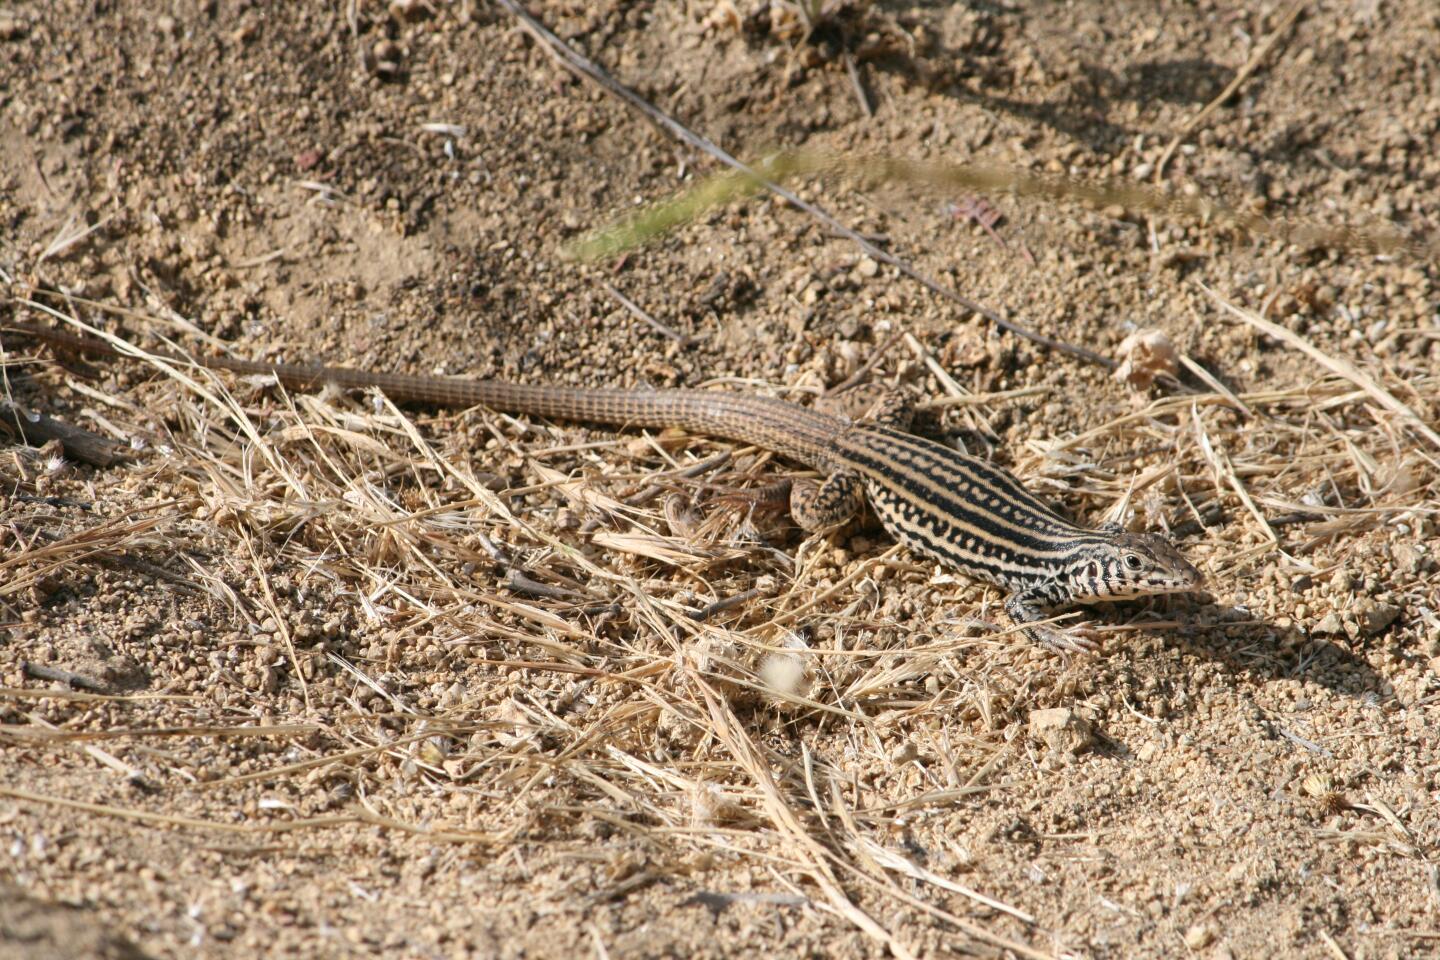 Whiptail lizard